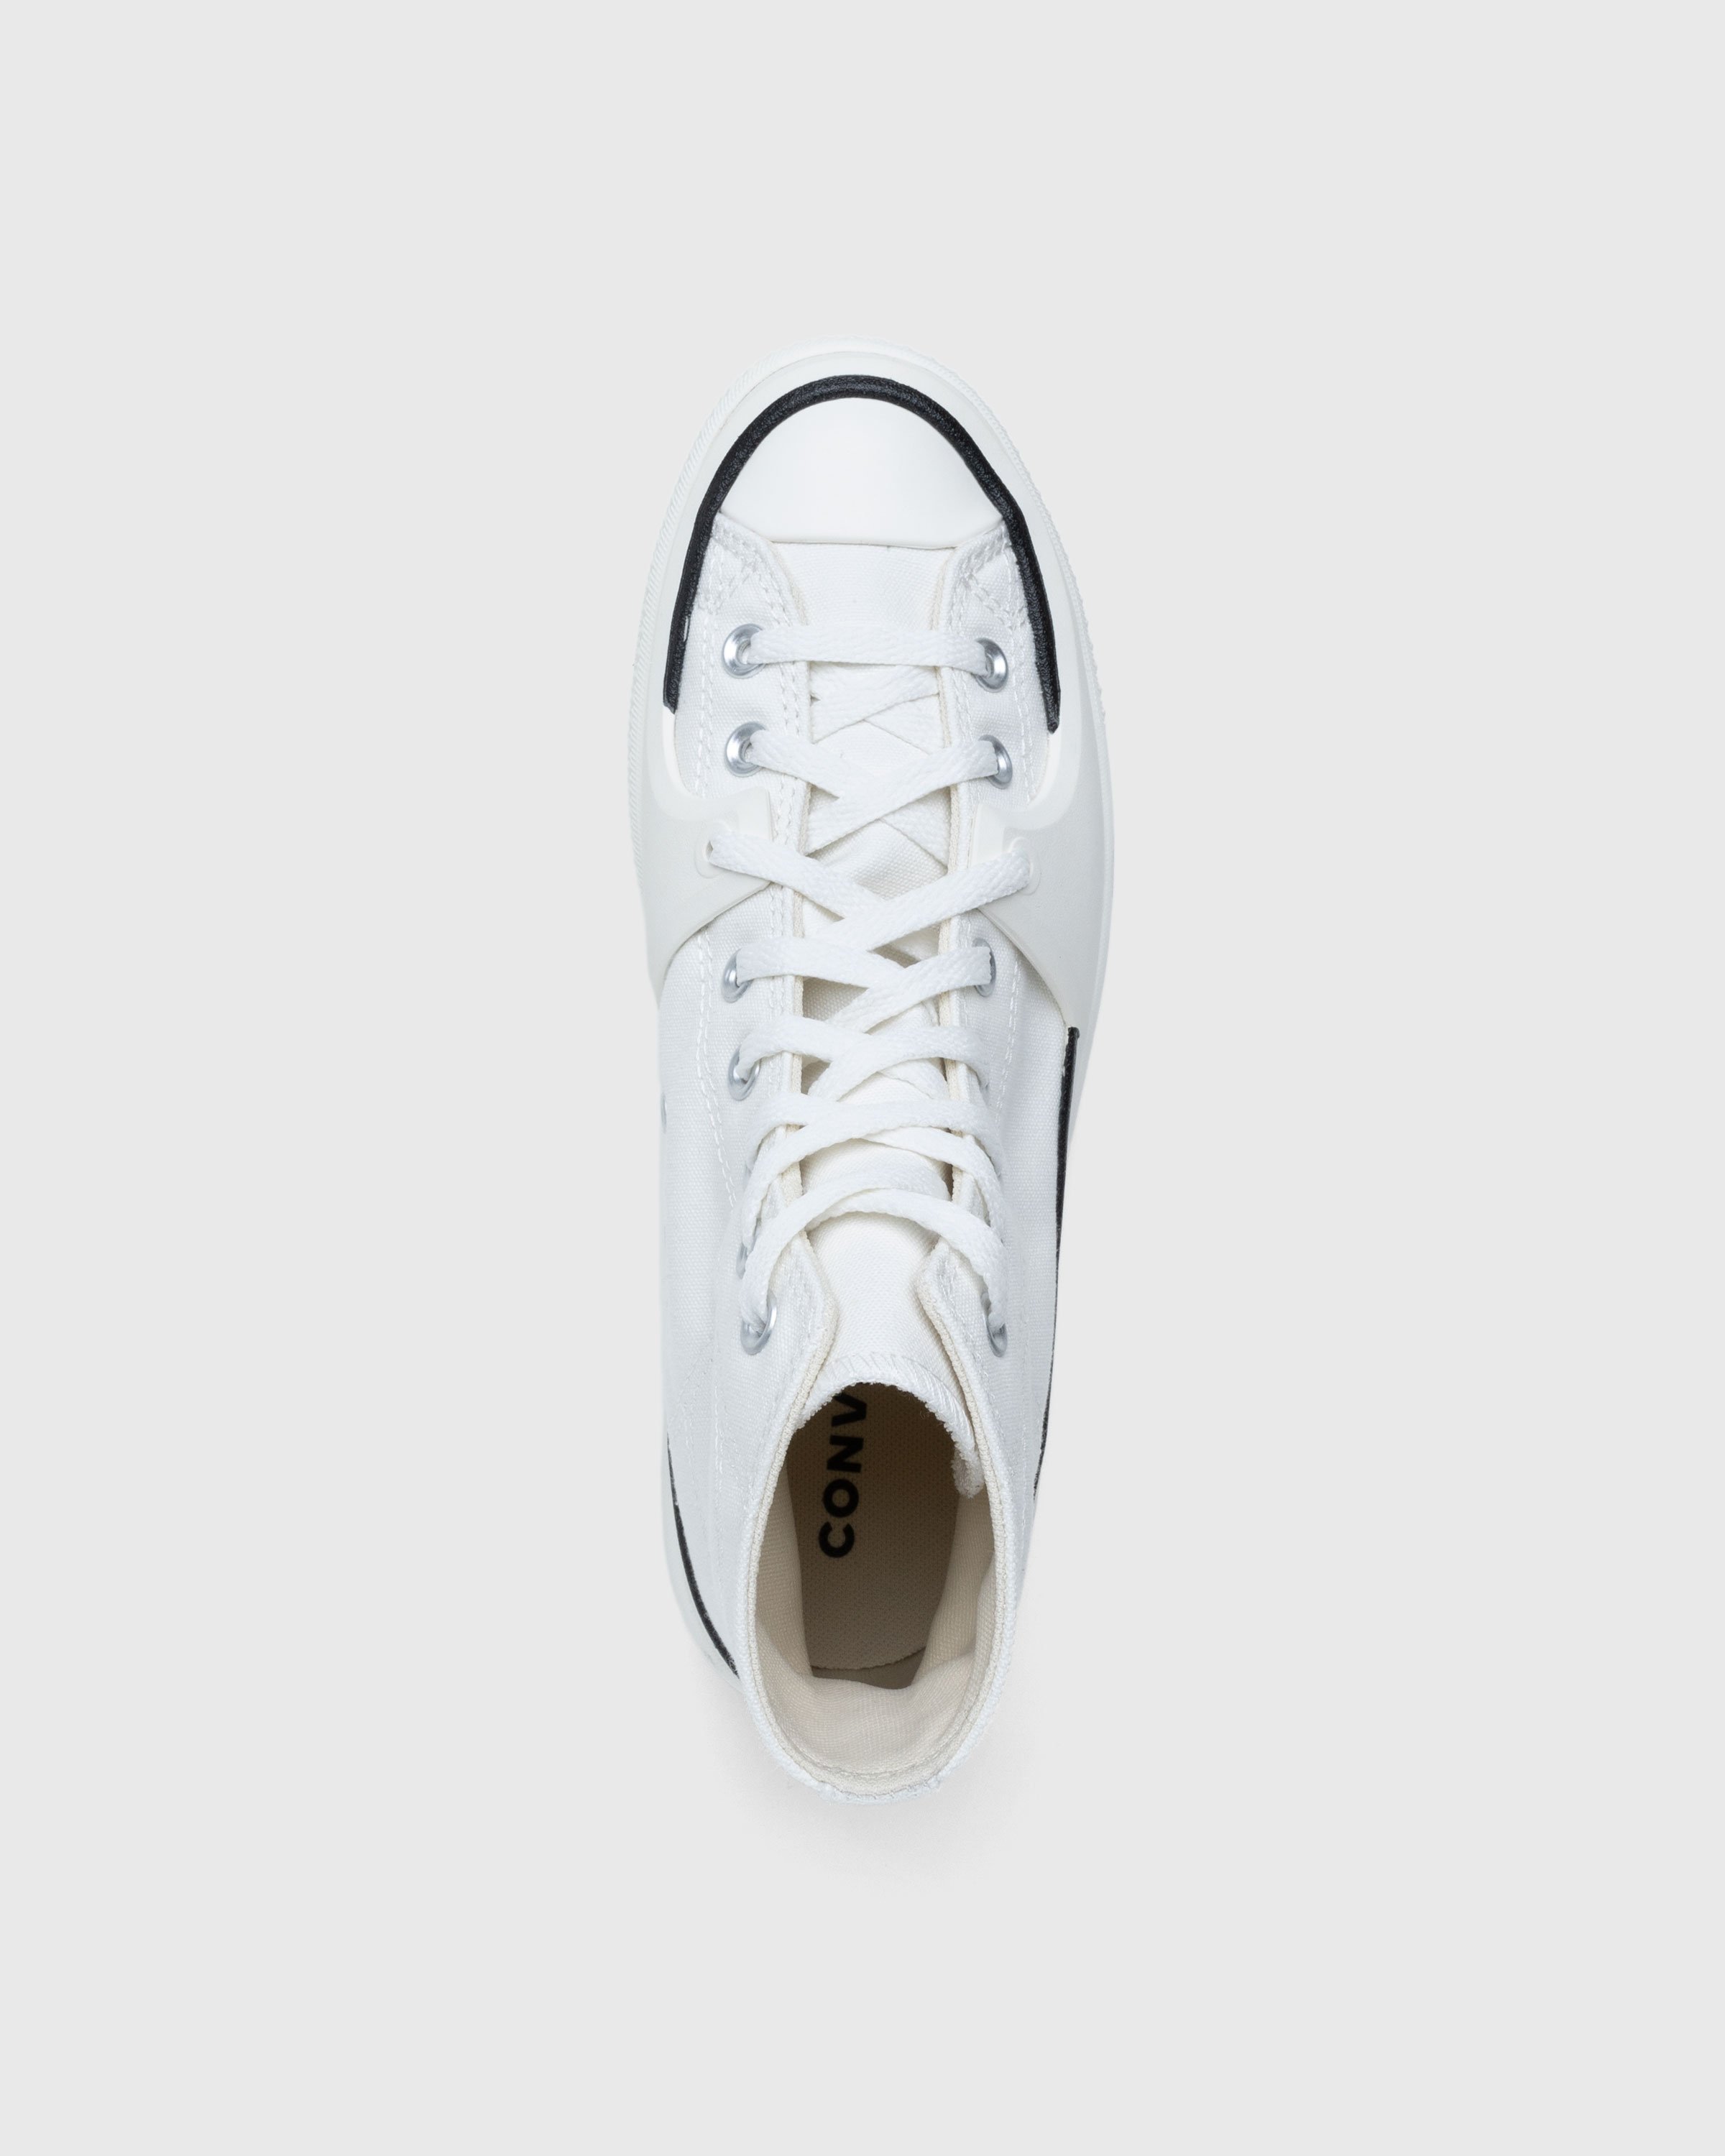 Converse - Chuck Taylor All Star Construct Hi Vintage White/Black/Egret - Footwear - Beige - Image 5